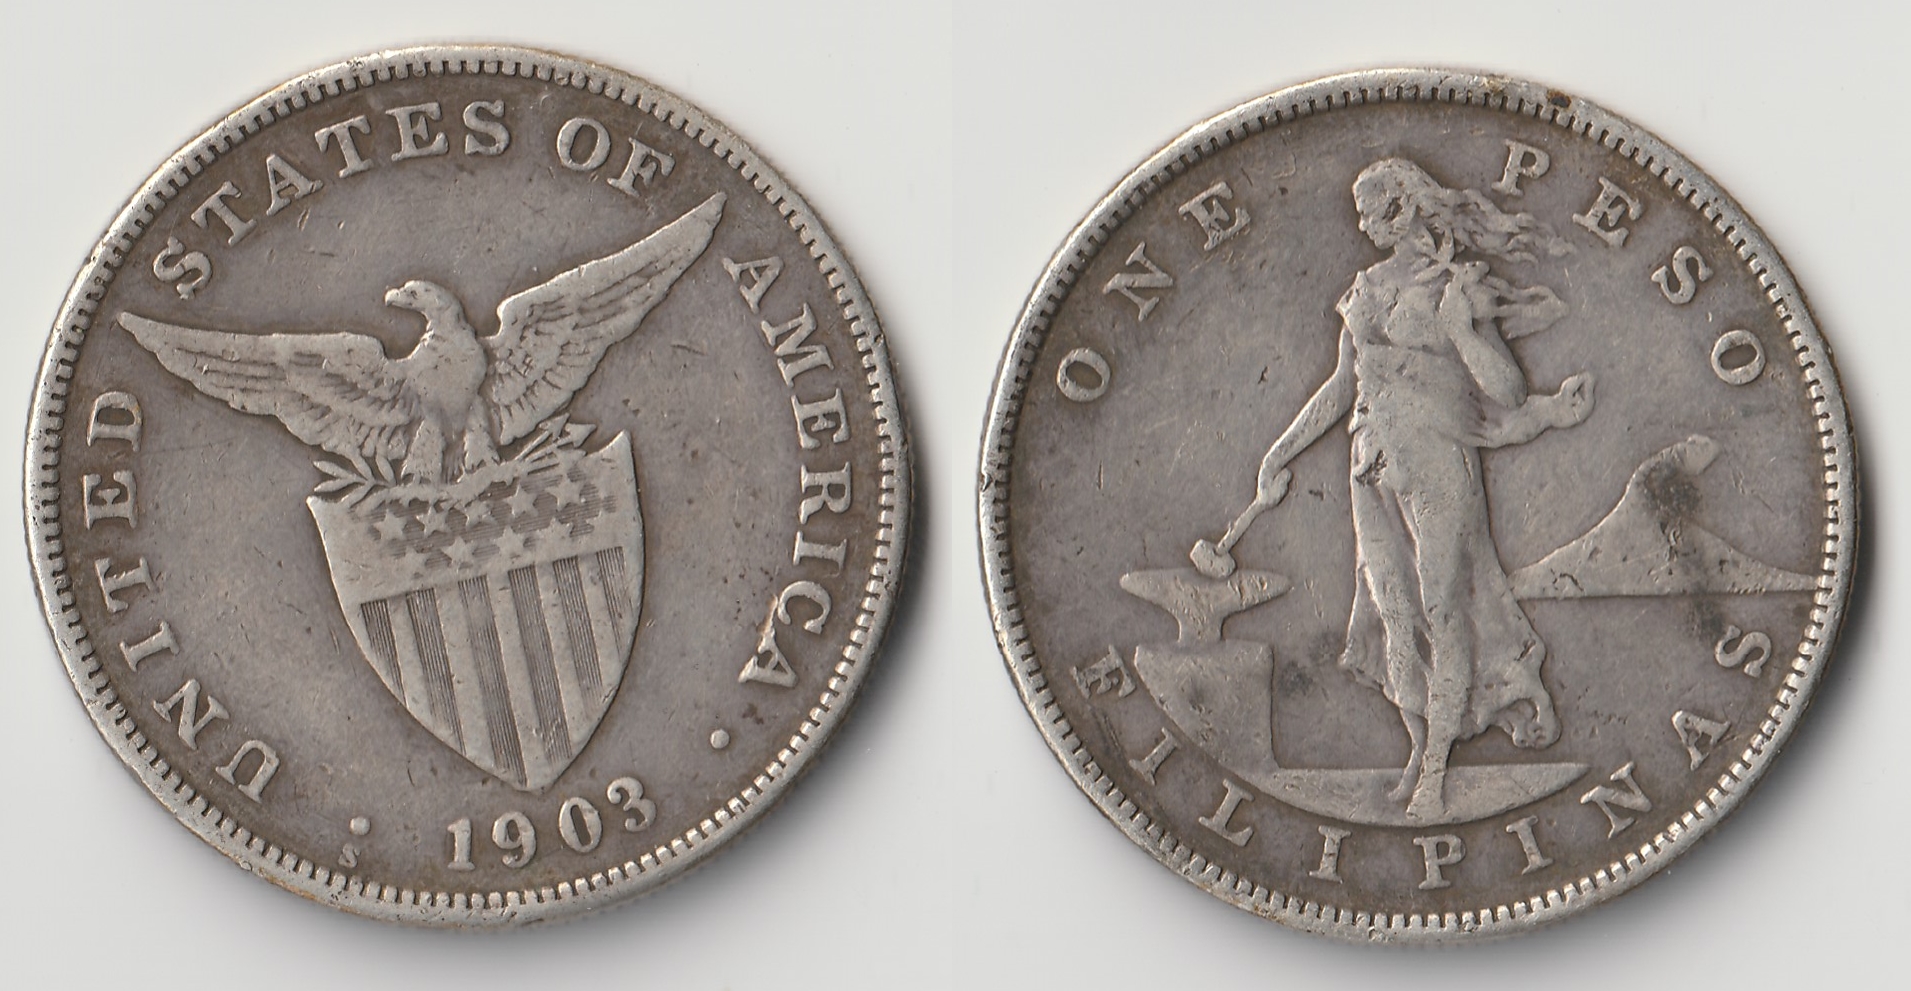 1903 s philippines 1 peso.jpg